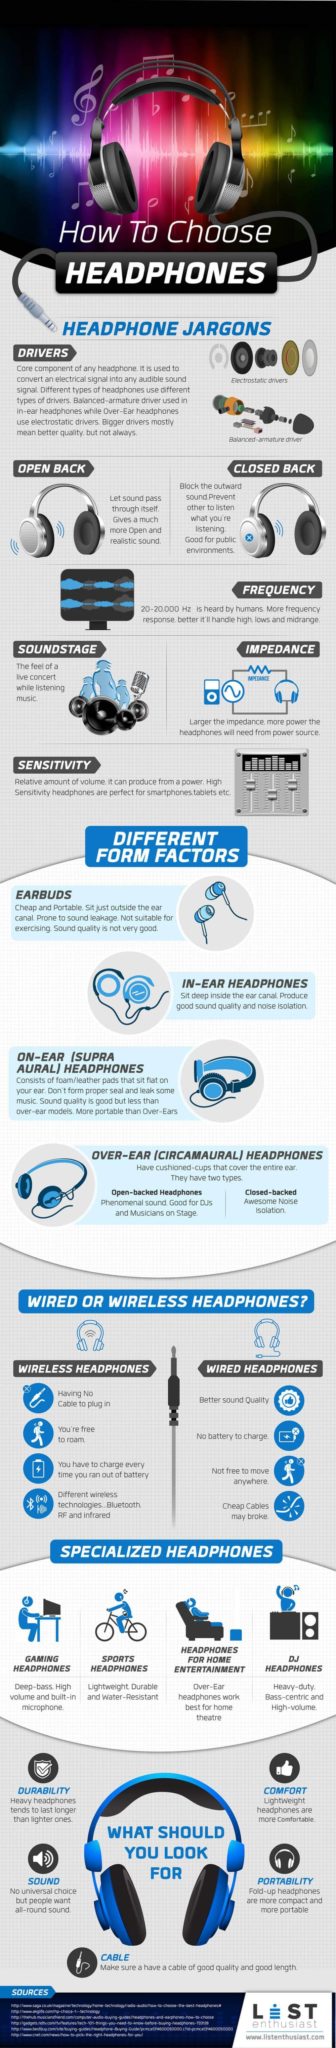 How To Choose Headphones